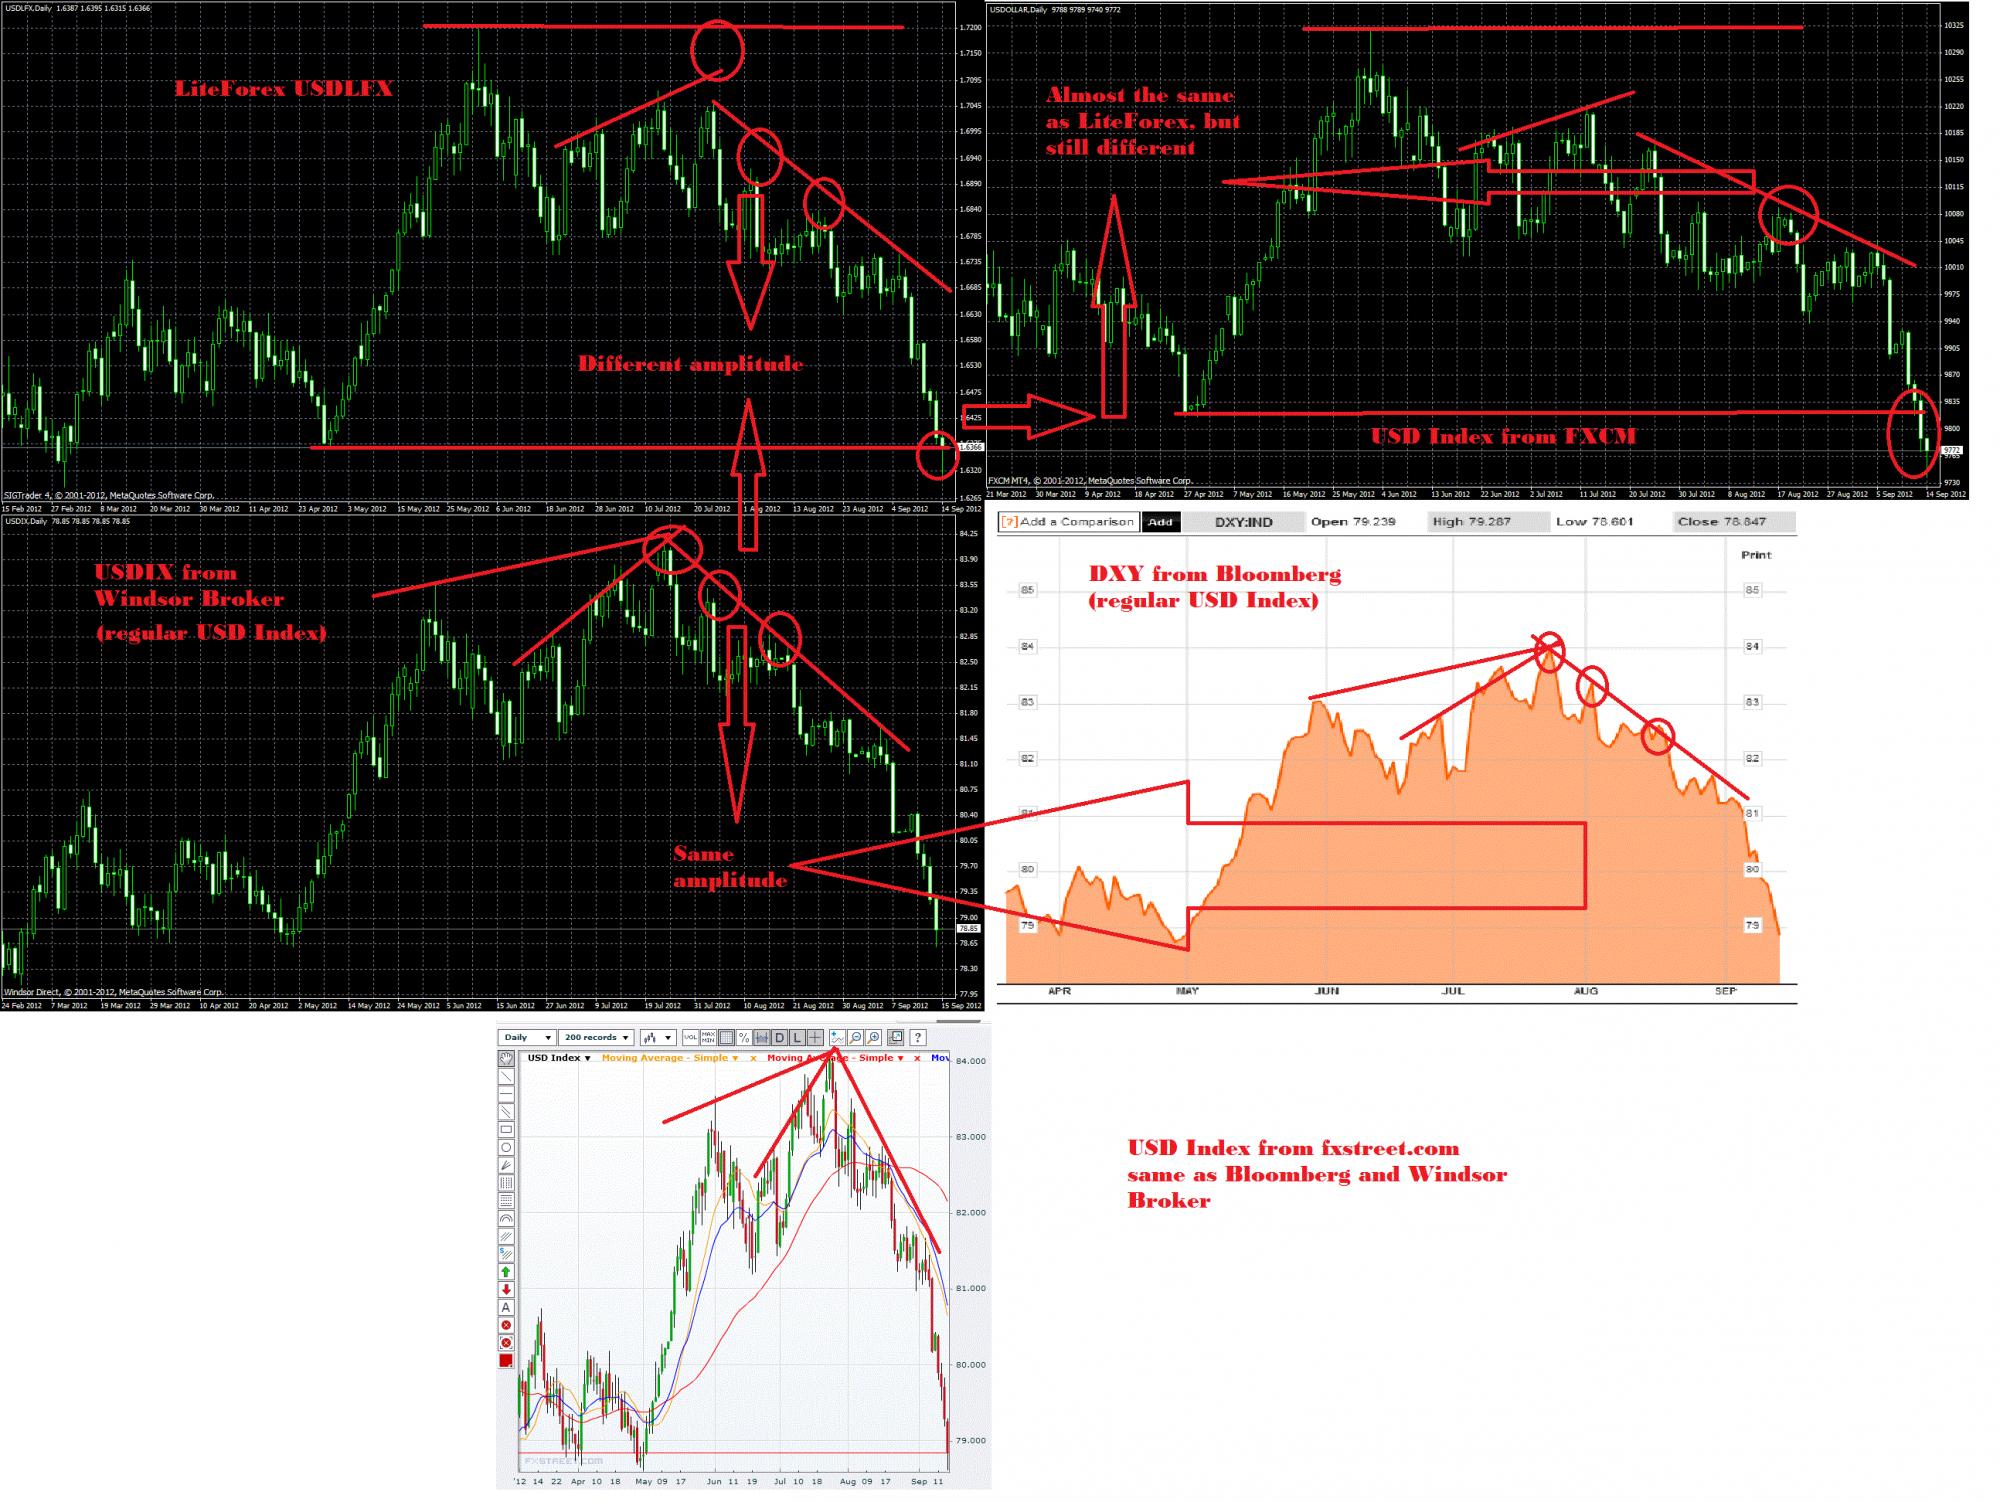 Dow Jones Fxcm Dollar Index Chart